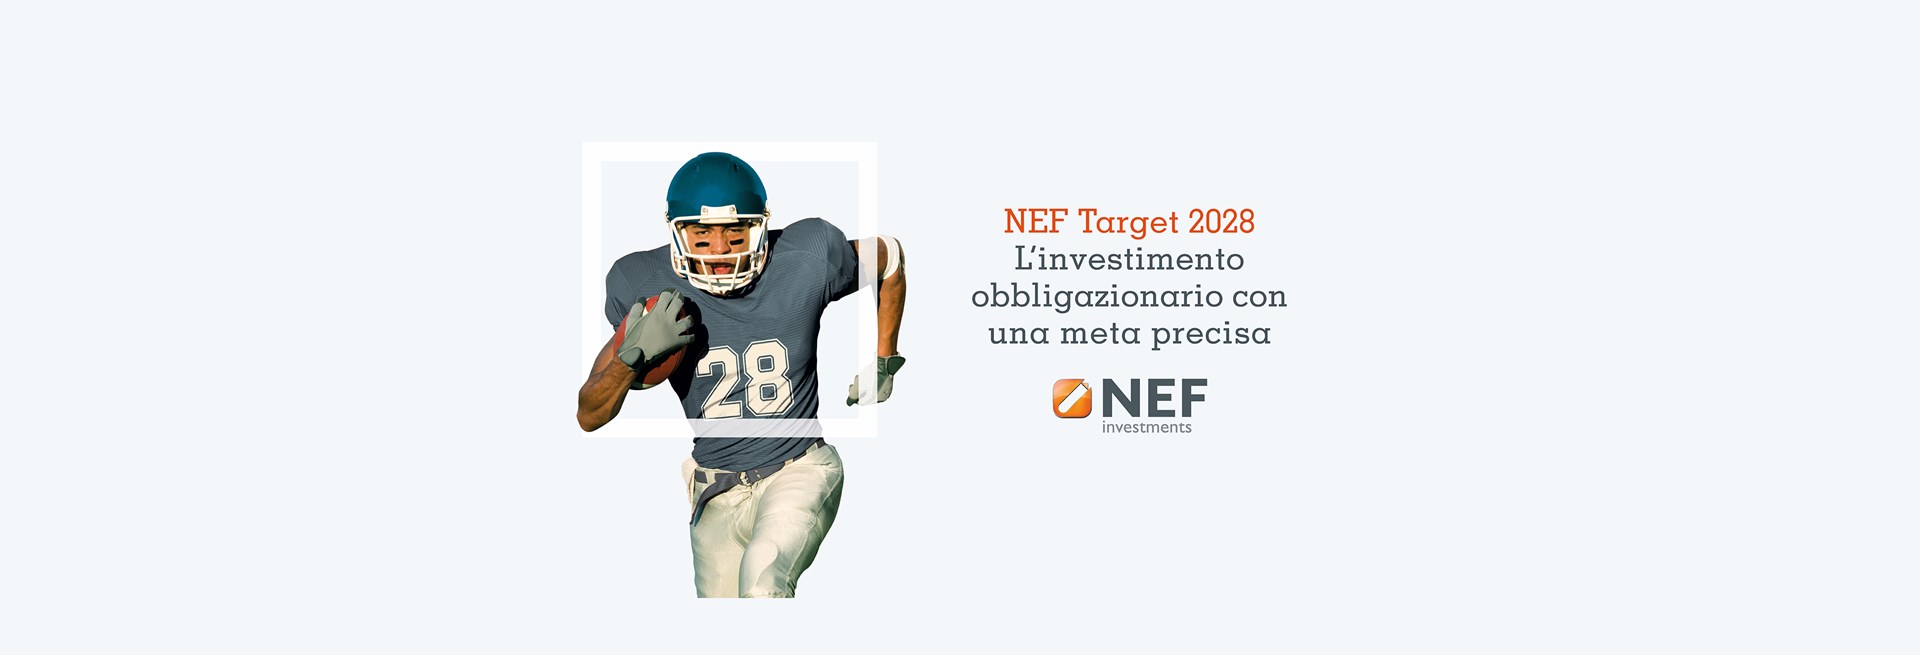 NEF Target 2028